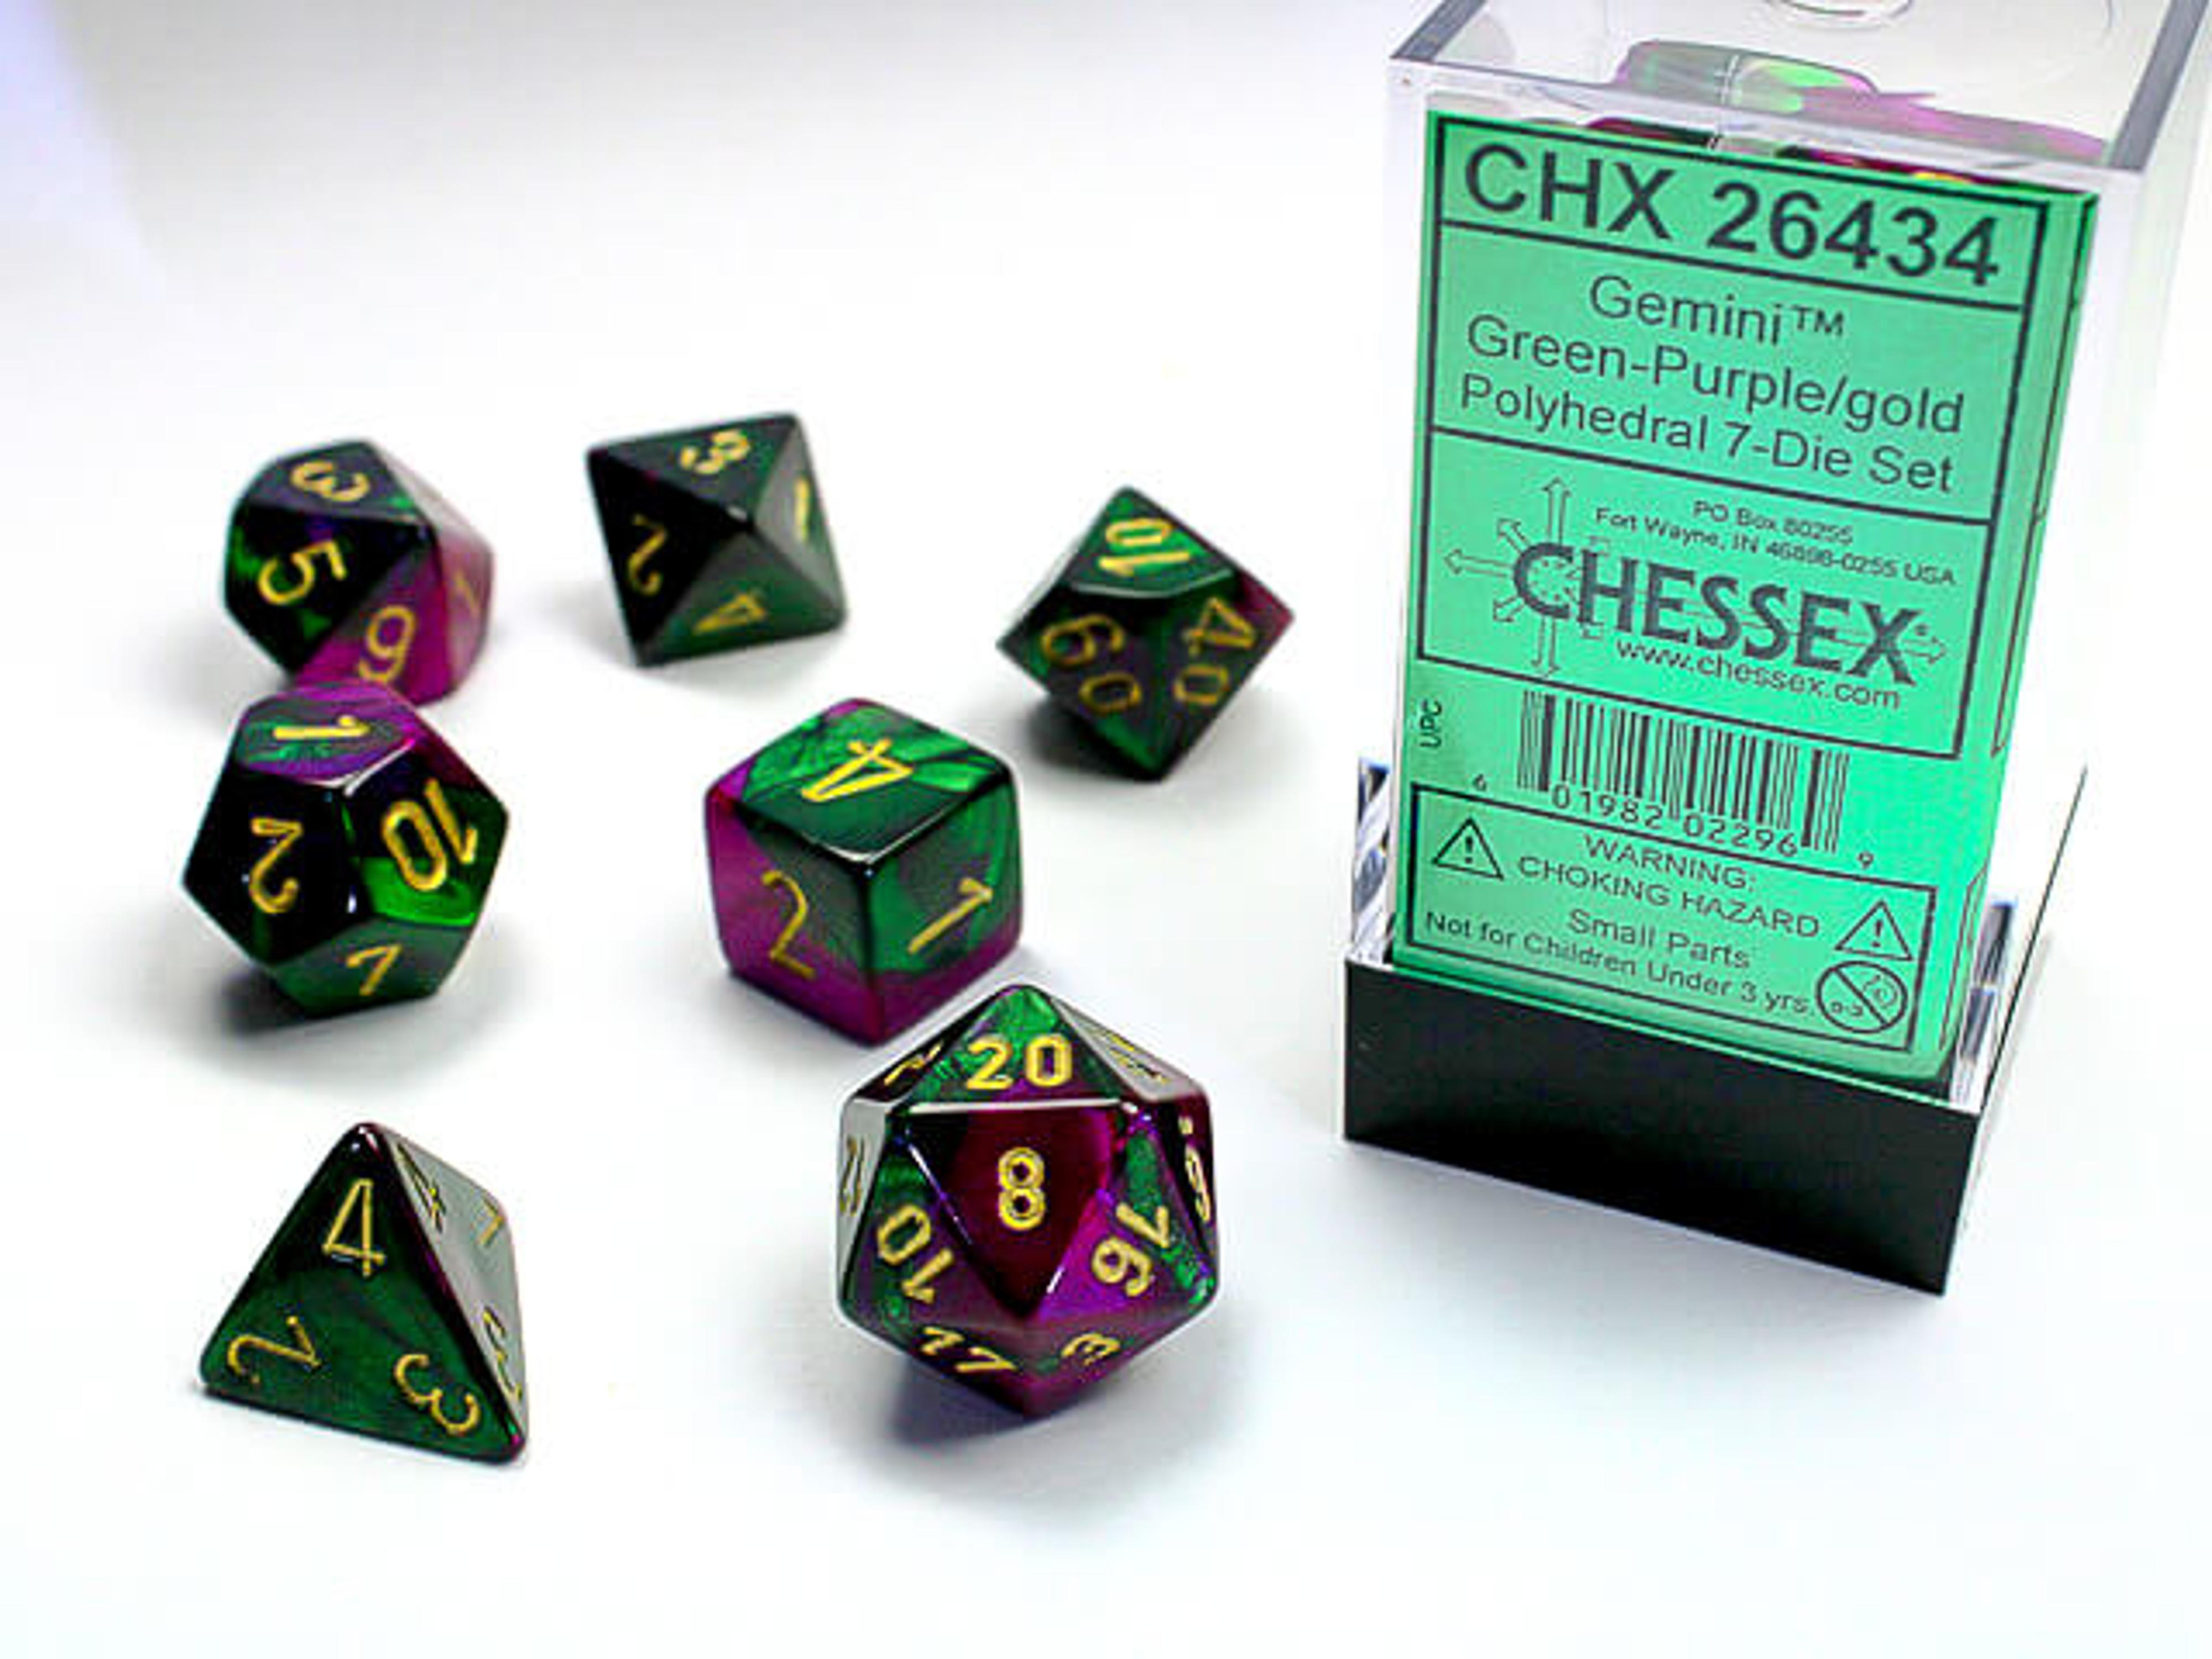 Chessex Gemini Polyhedral Green-Purple/Gold 7 Die Set